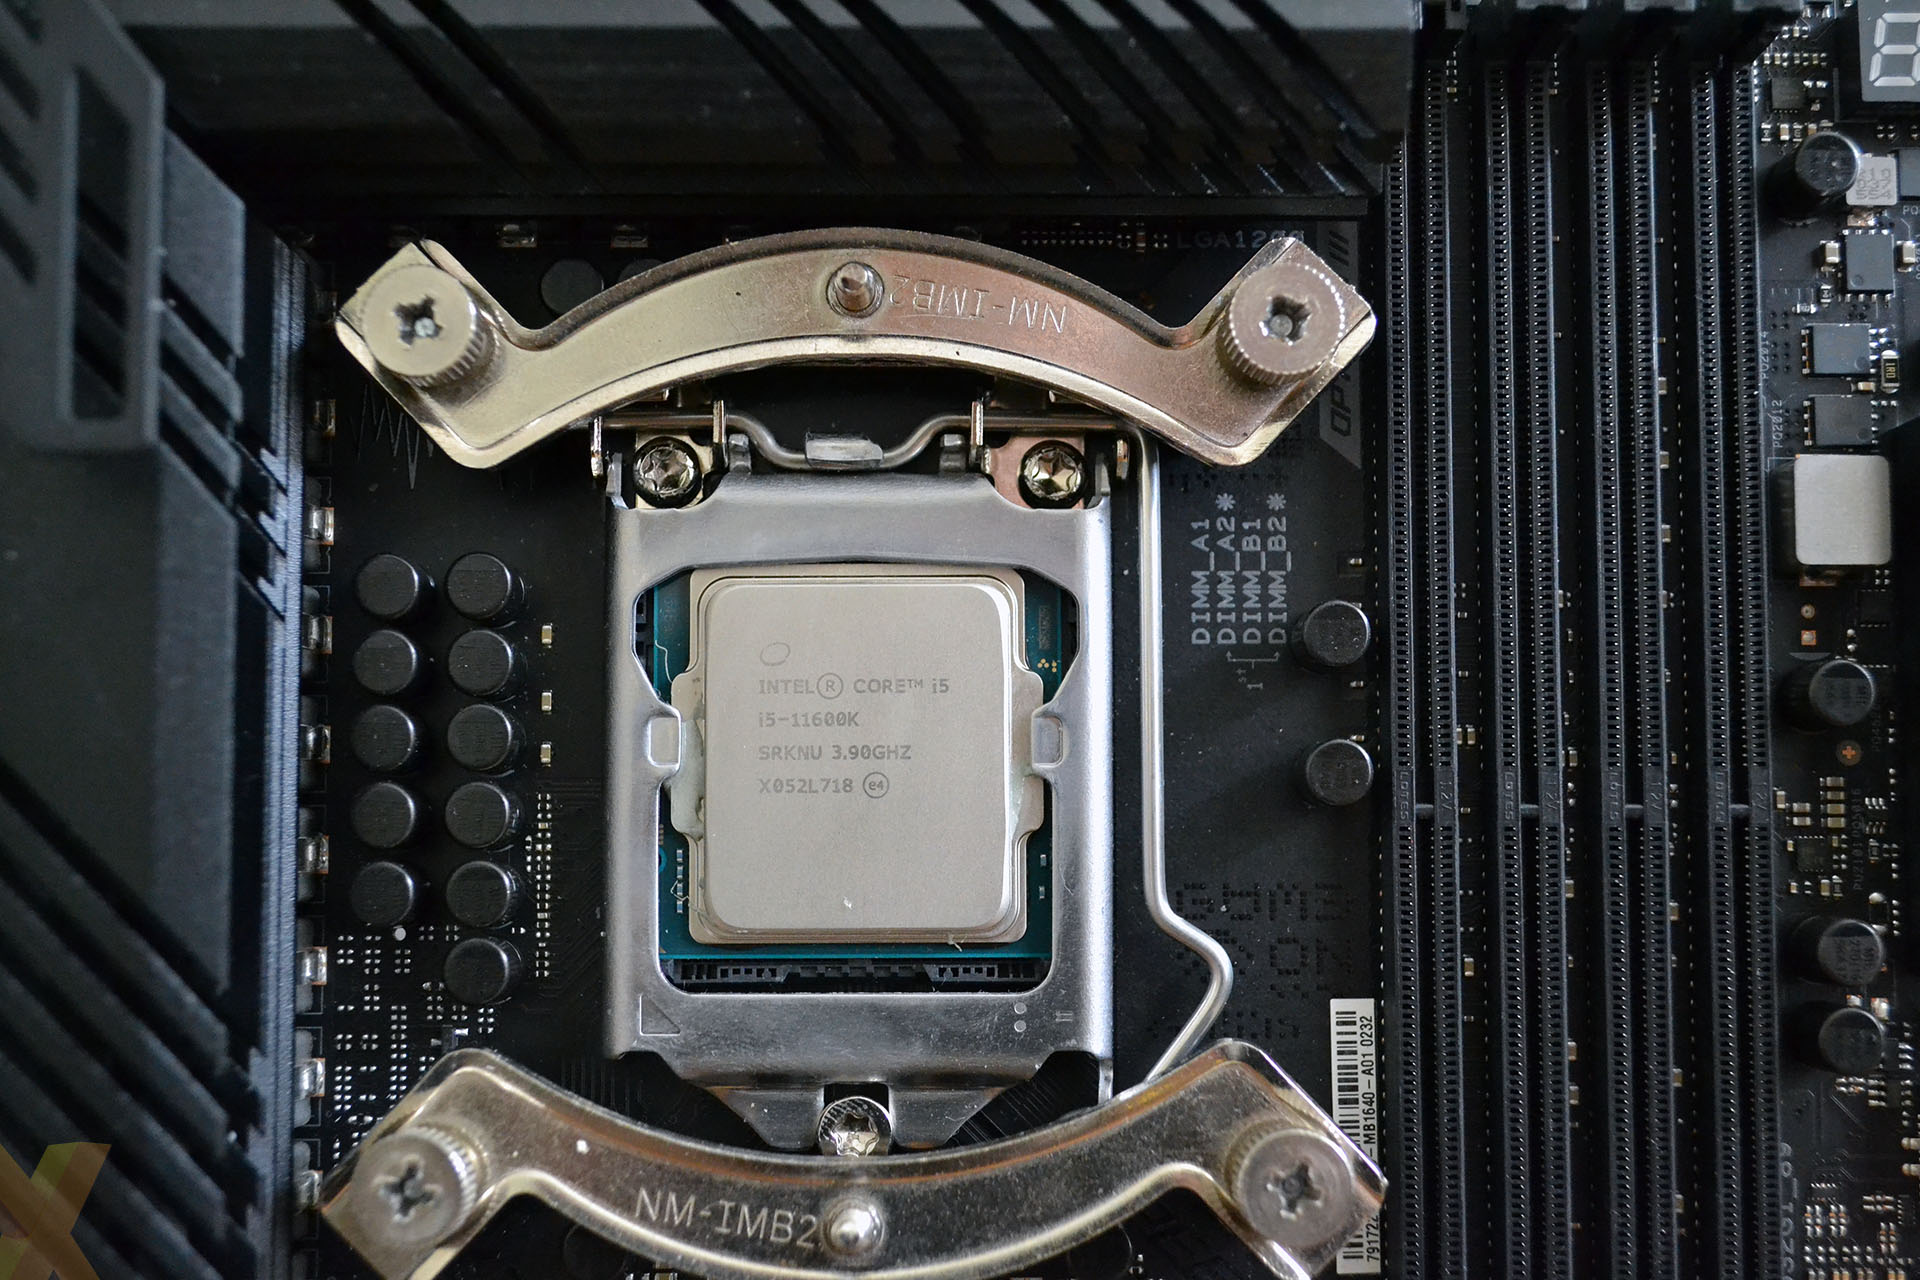 Review: Intel Core i5-11600K - CPU - HEXUS.net